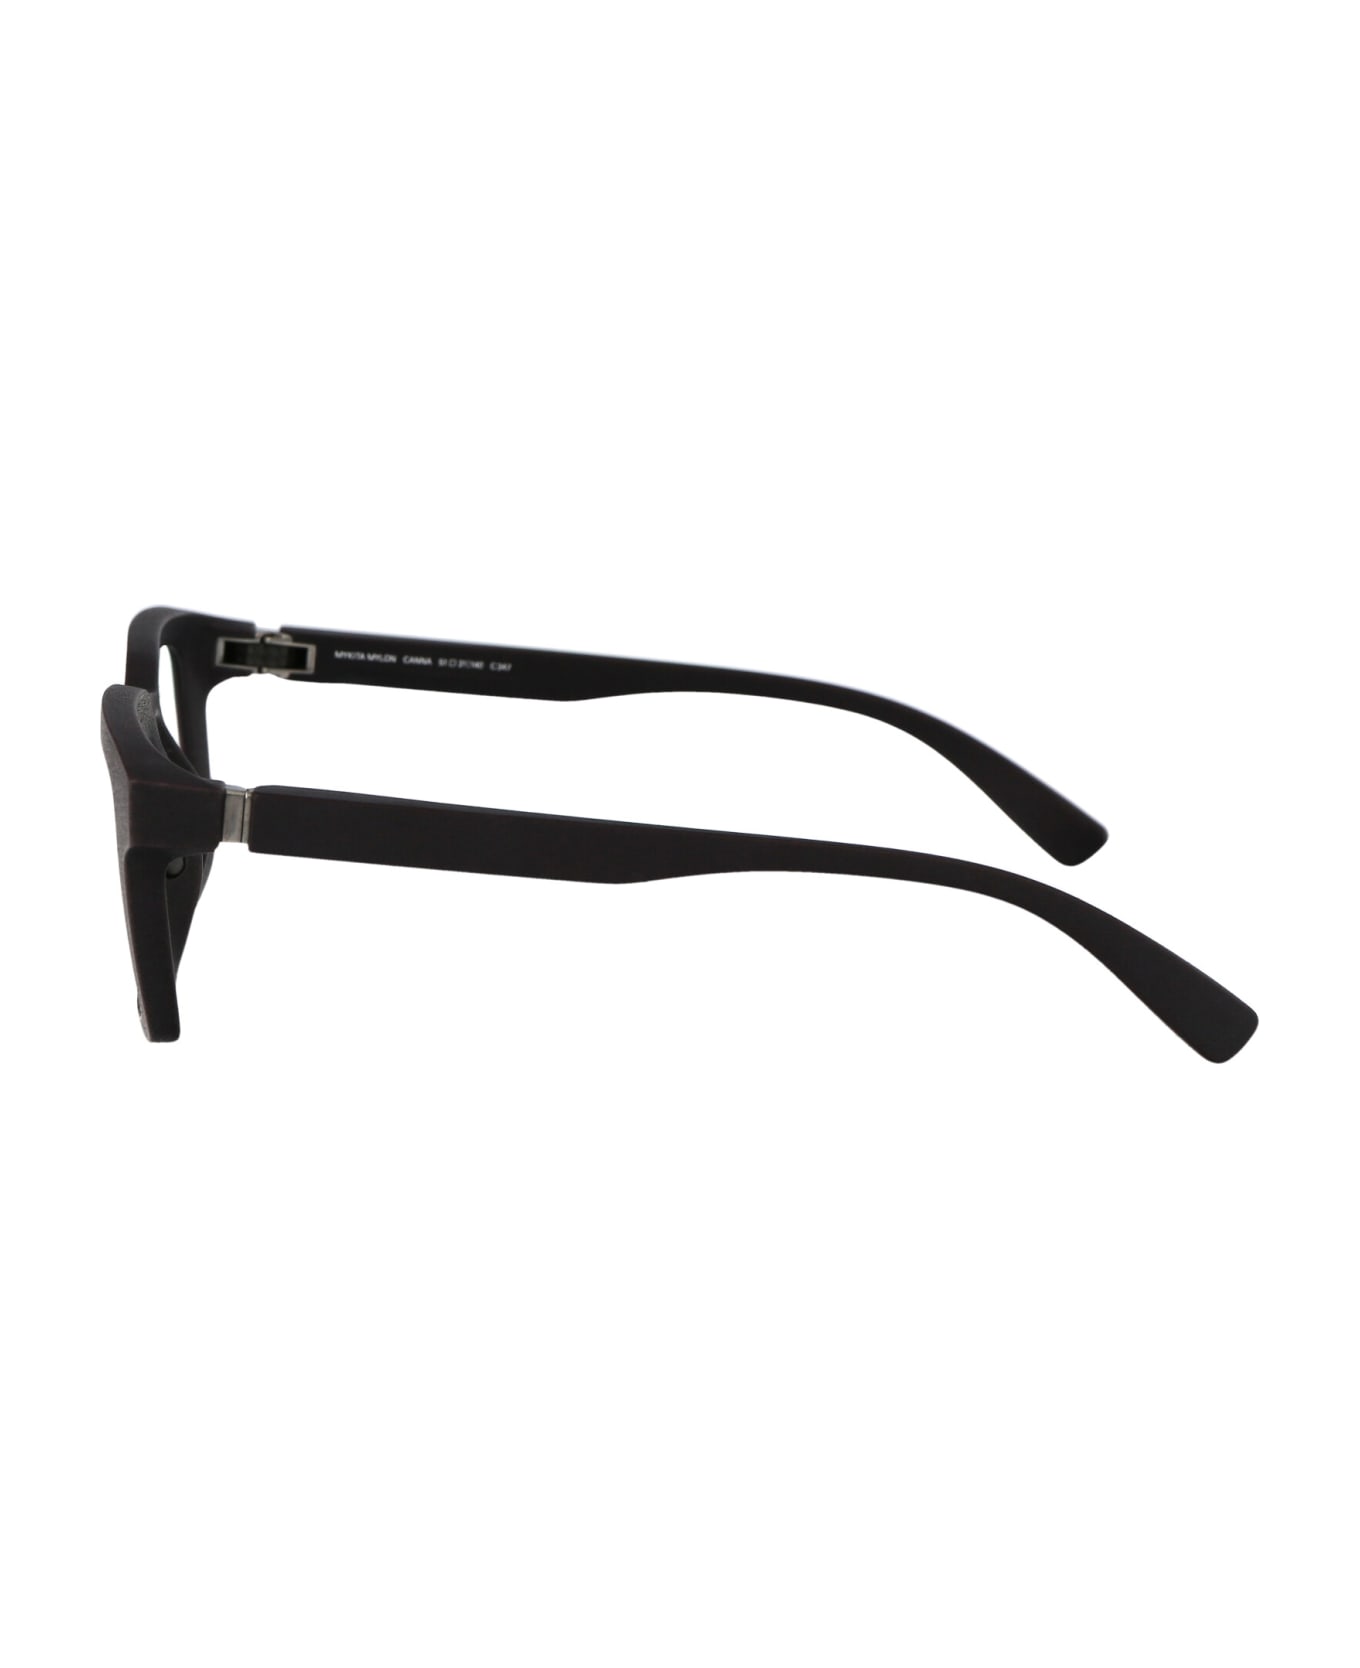 Mykita Canna Glasses - 347 MD35-Slate Grey Clear